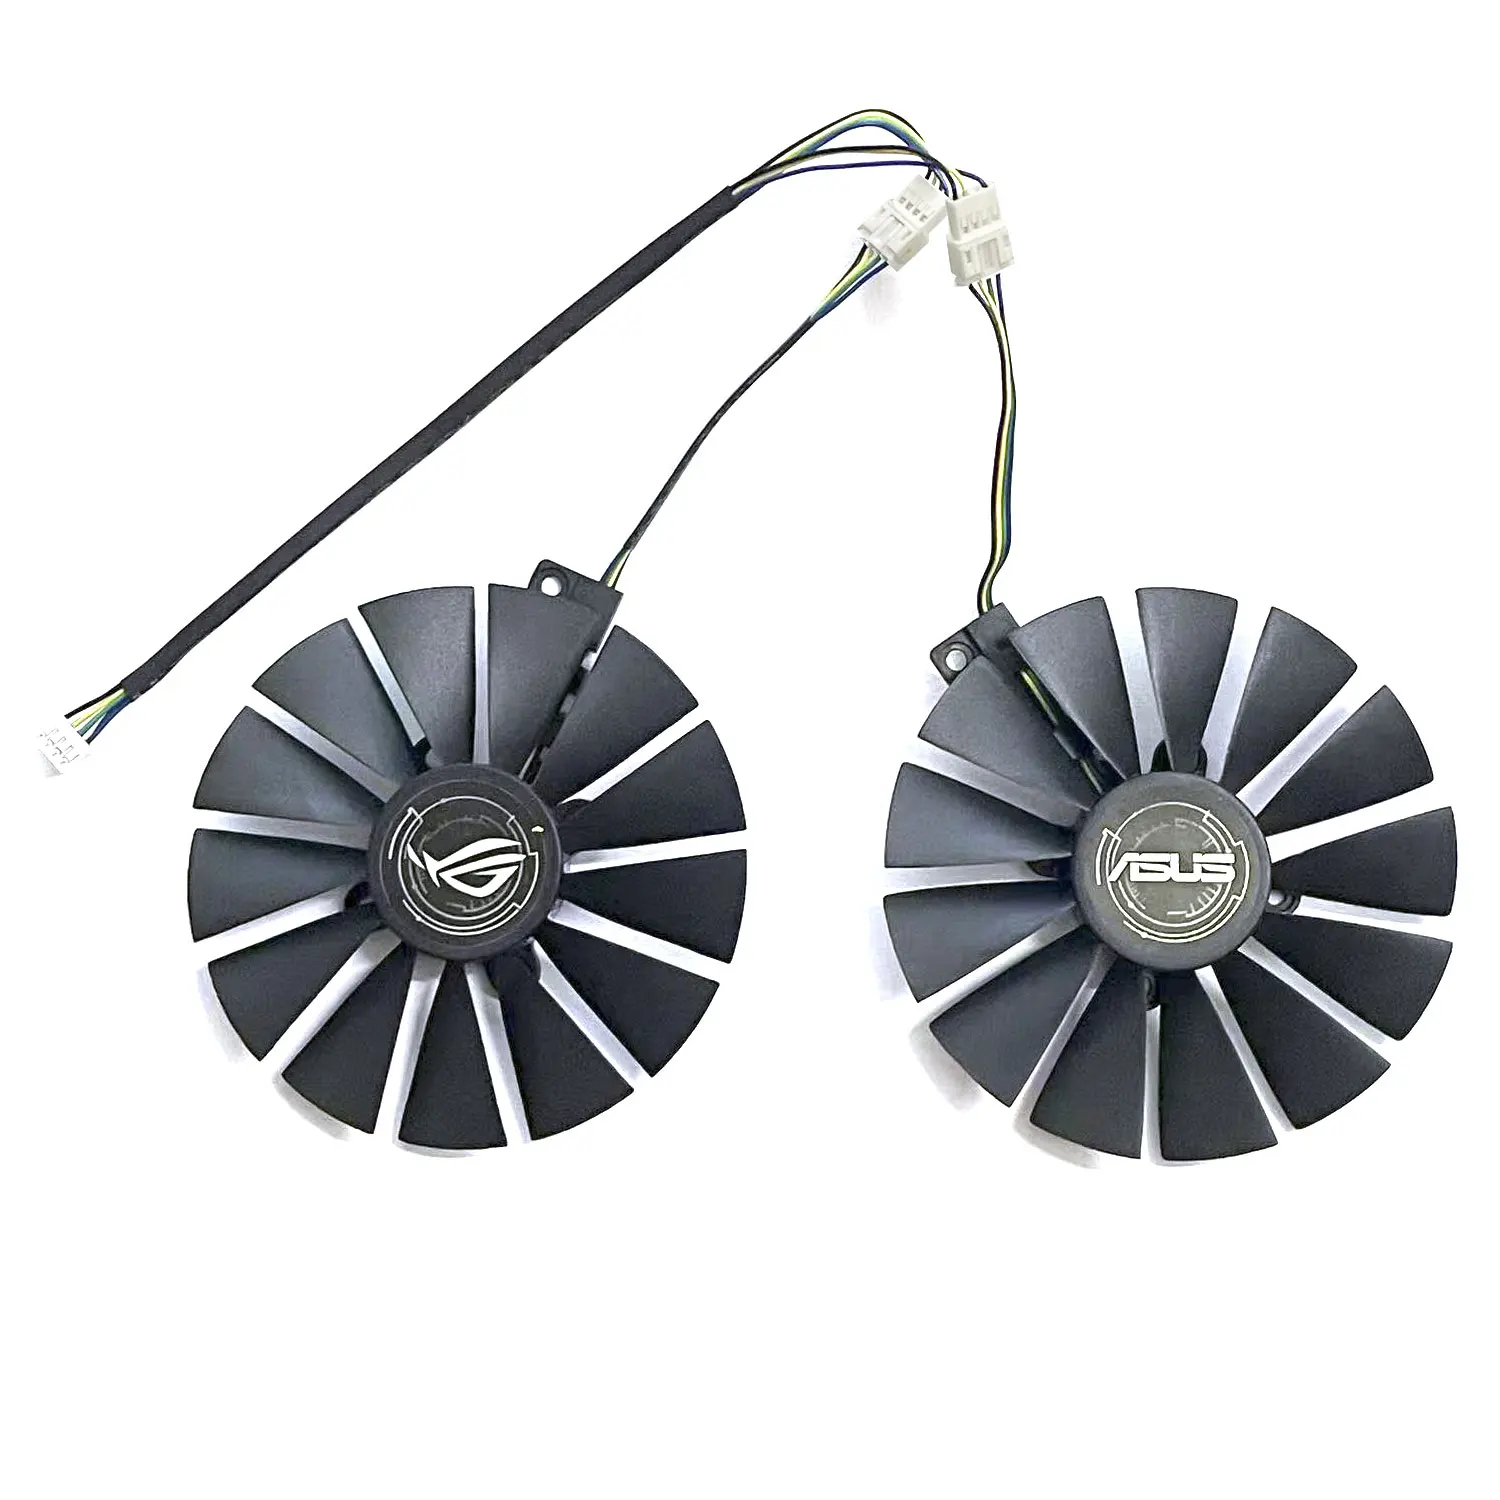 Free Shipping T129215SM 95mm Cooler Fan For ASUS STRIX RX 470 580 570 GTX 1050Ti 1070Ti 1080Ti Gaming Video Card Cooling Fan